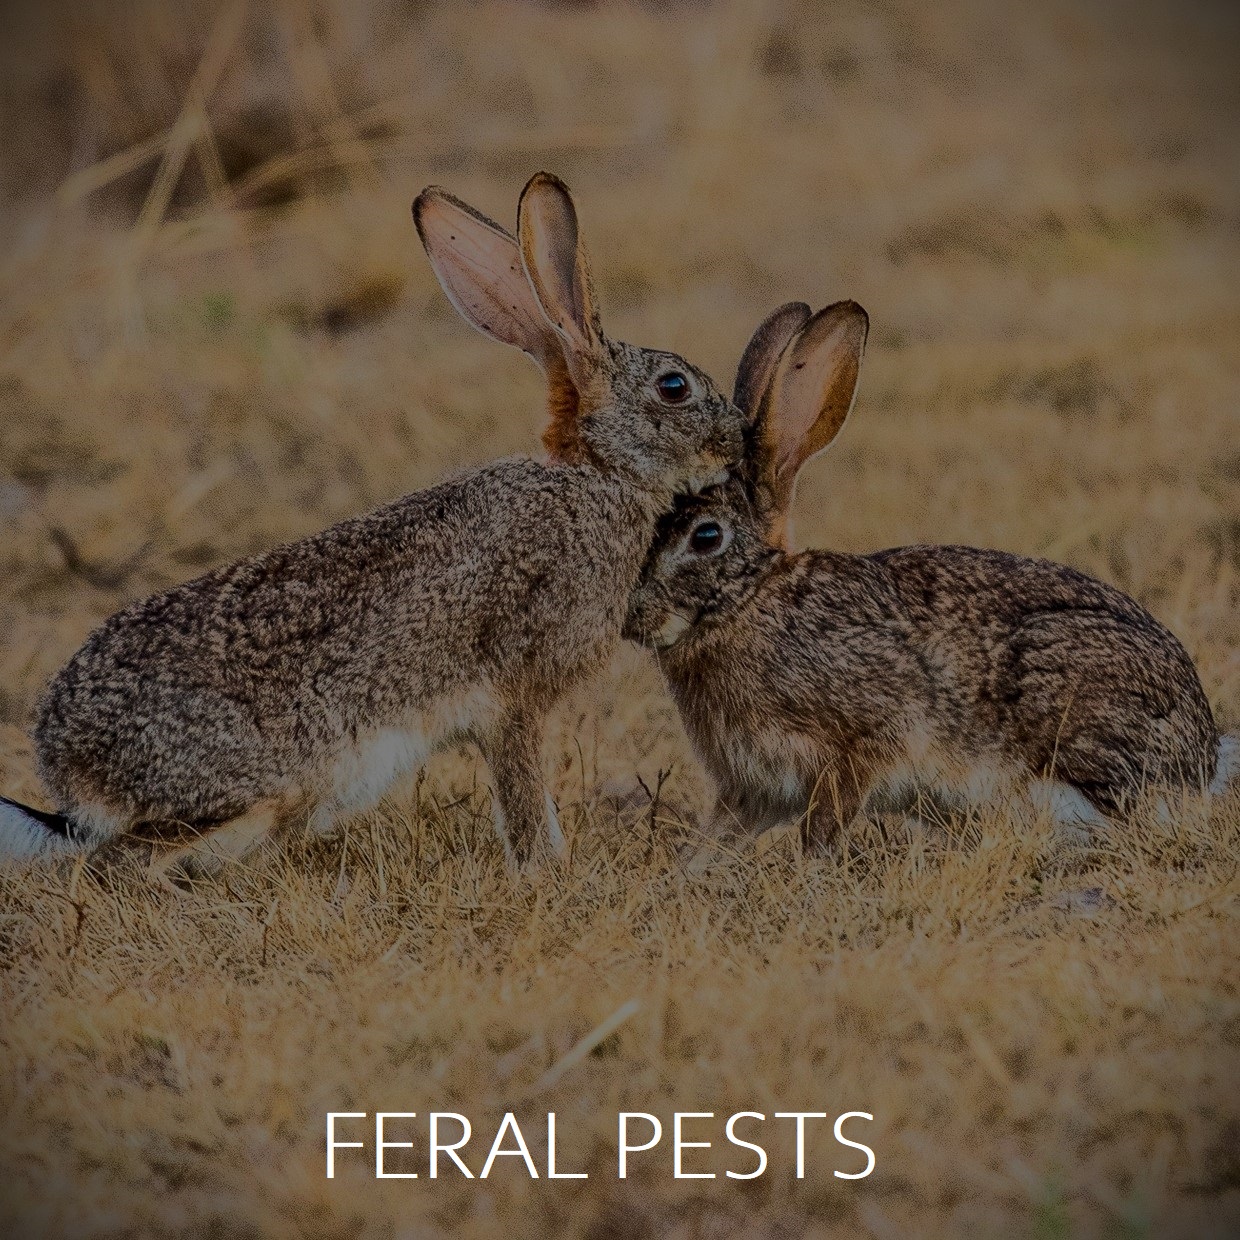 Ferald Pests